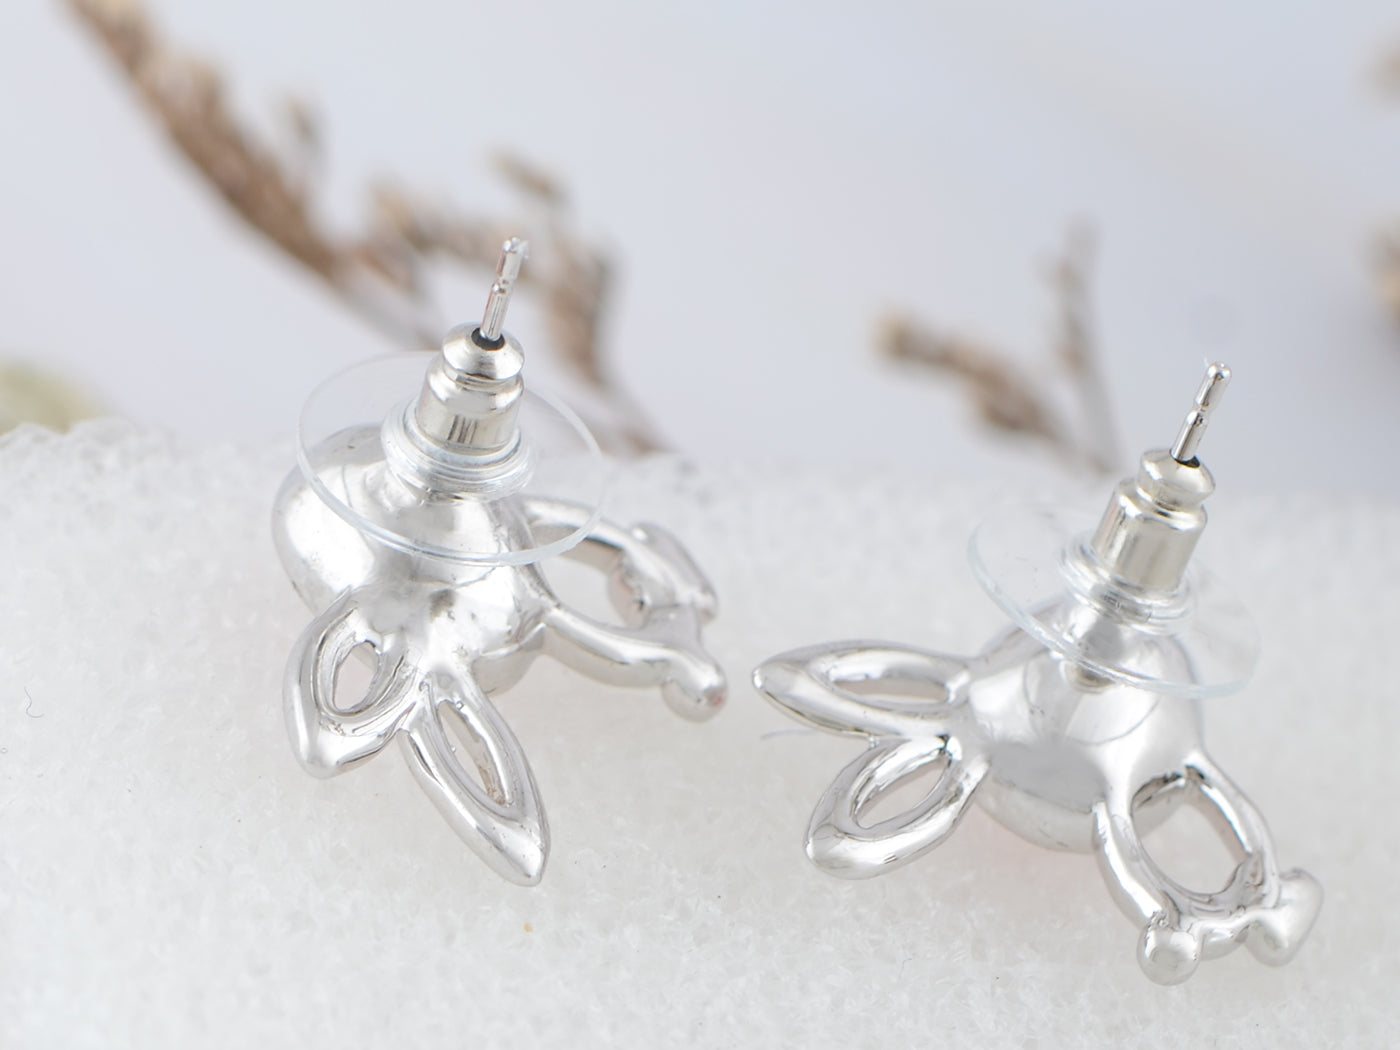 Swarovski Crystal Element Silver Pink Flower Leaf Swirl Stud Earrings